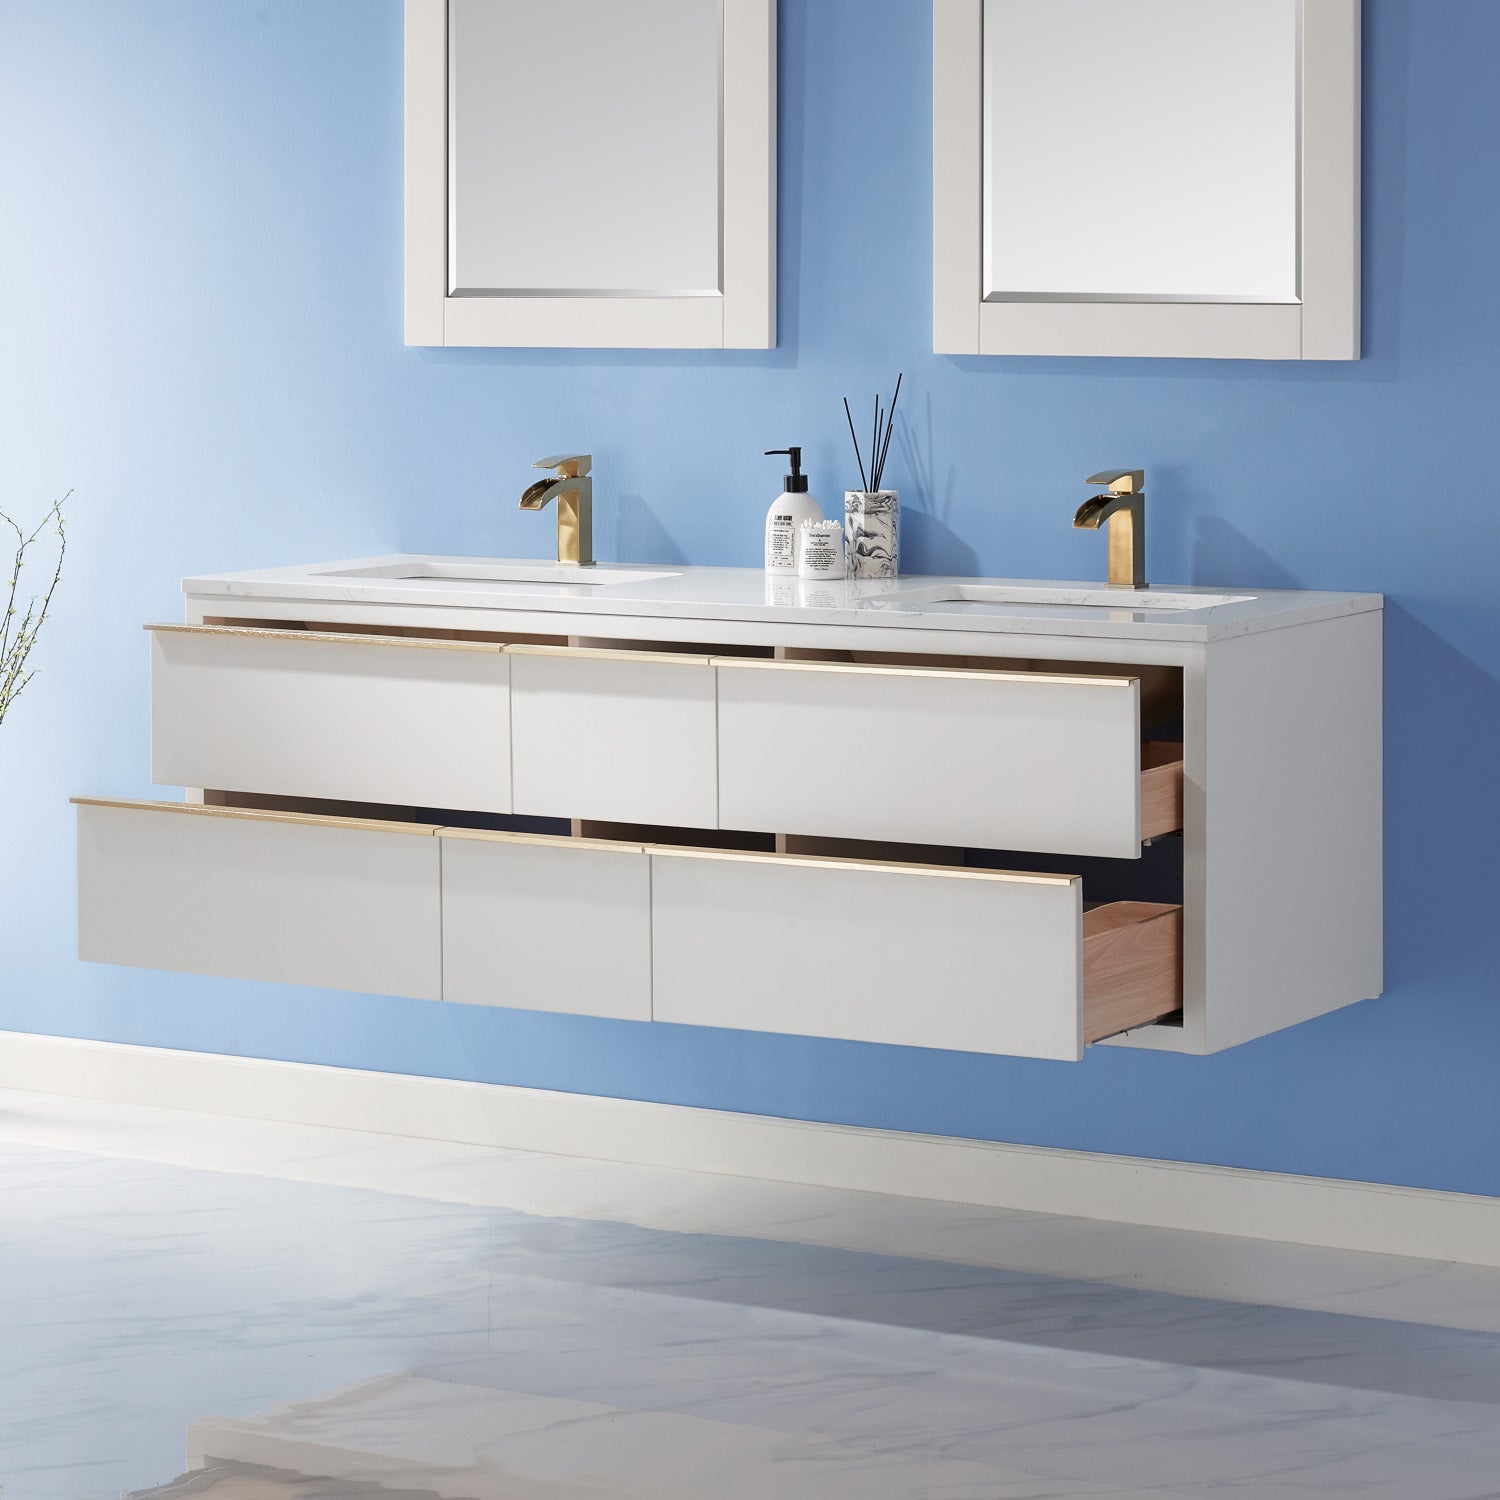 Morgan 60" Double Bathroom Vanity Set in White and Composite Aosta White Stone Countertop